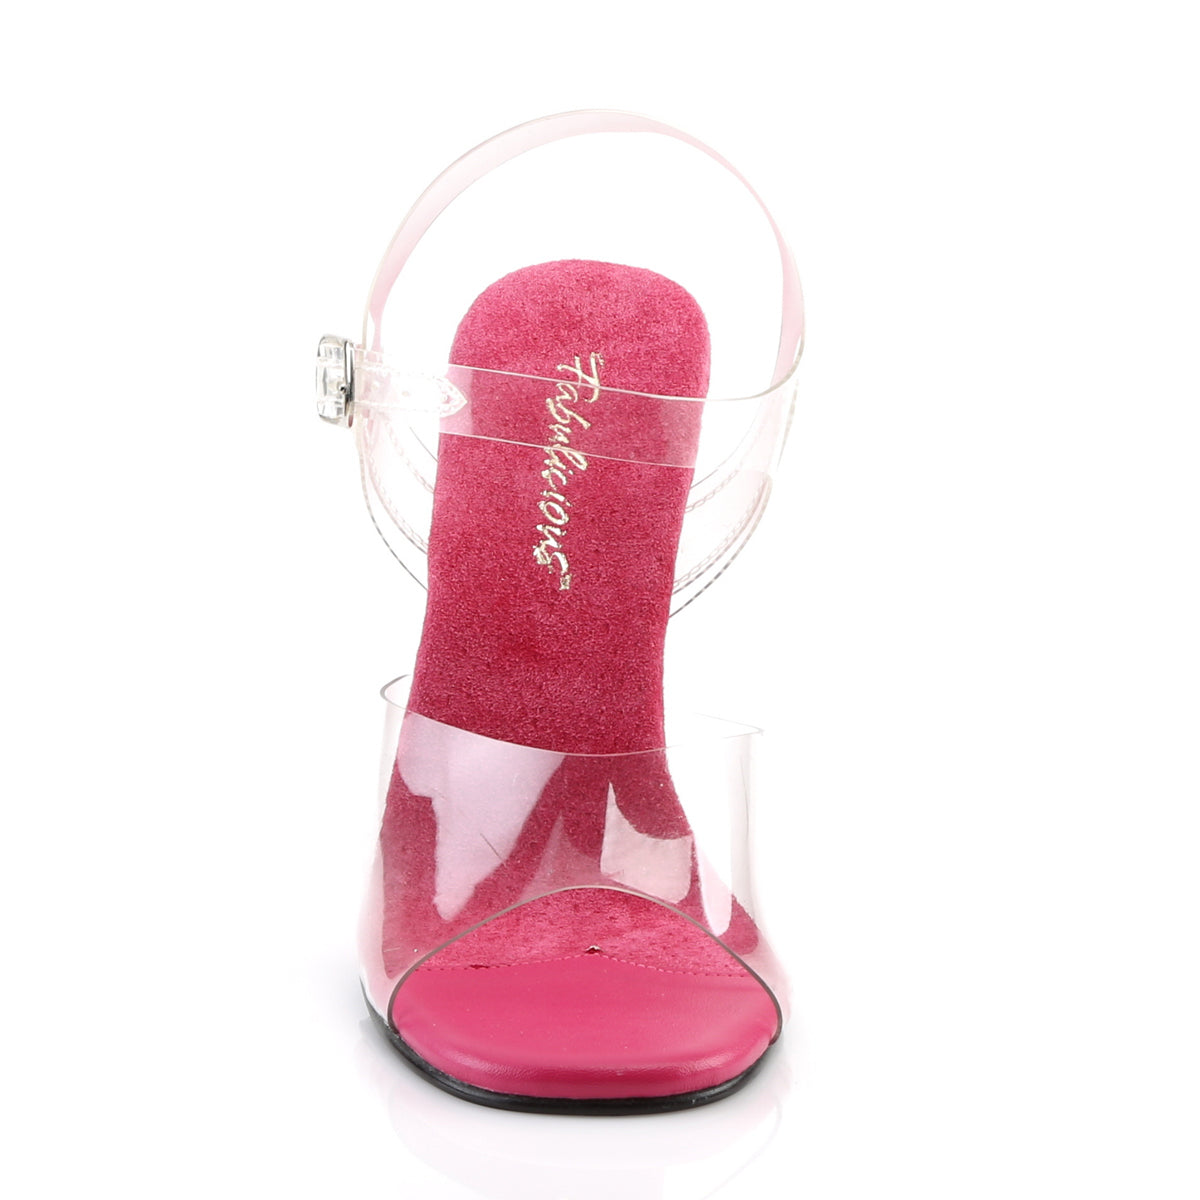 GALA-08 Fabulicious 4.5 Inch Heel Clear Raspberry Sexy Shoes-Fabulicious- Sexy Shoes Alternative Footwear